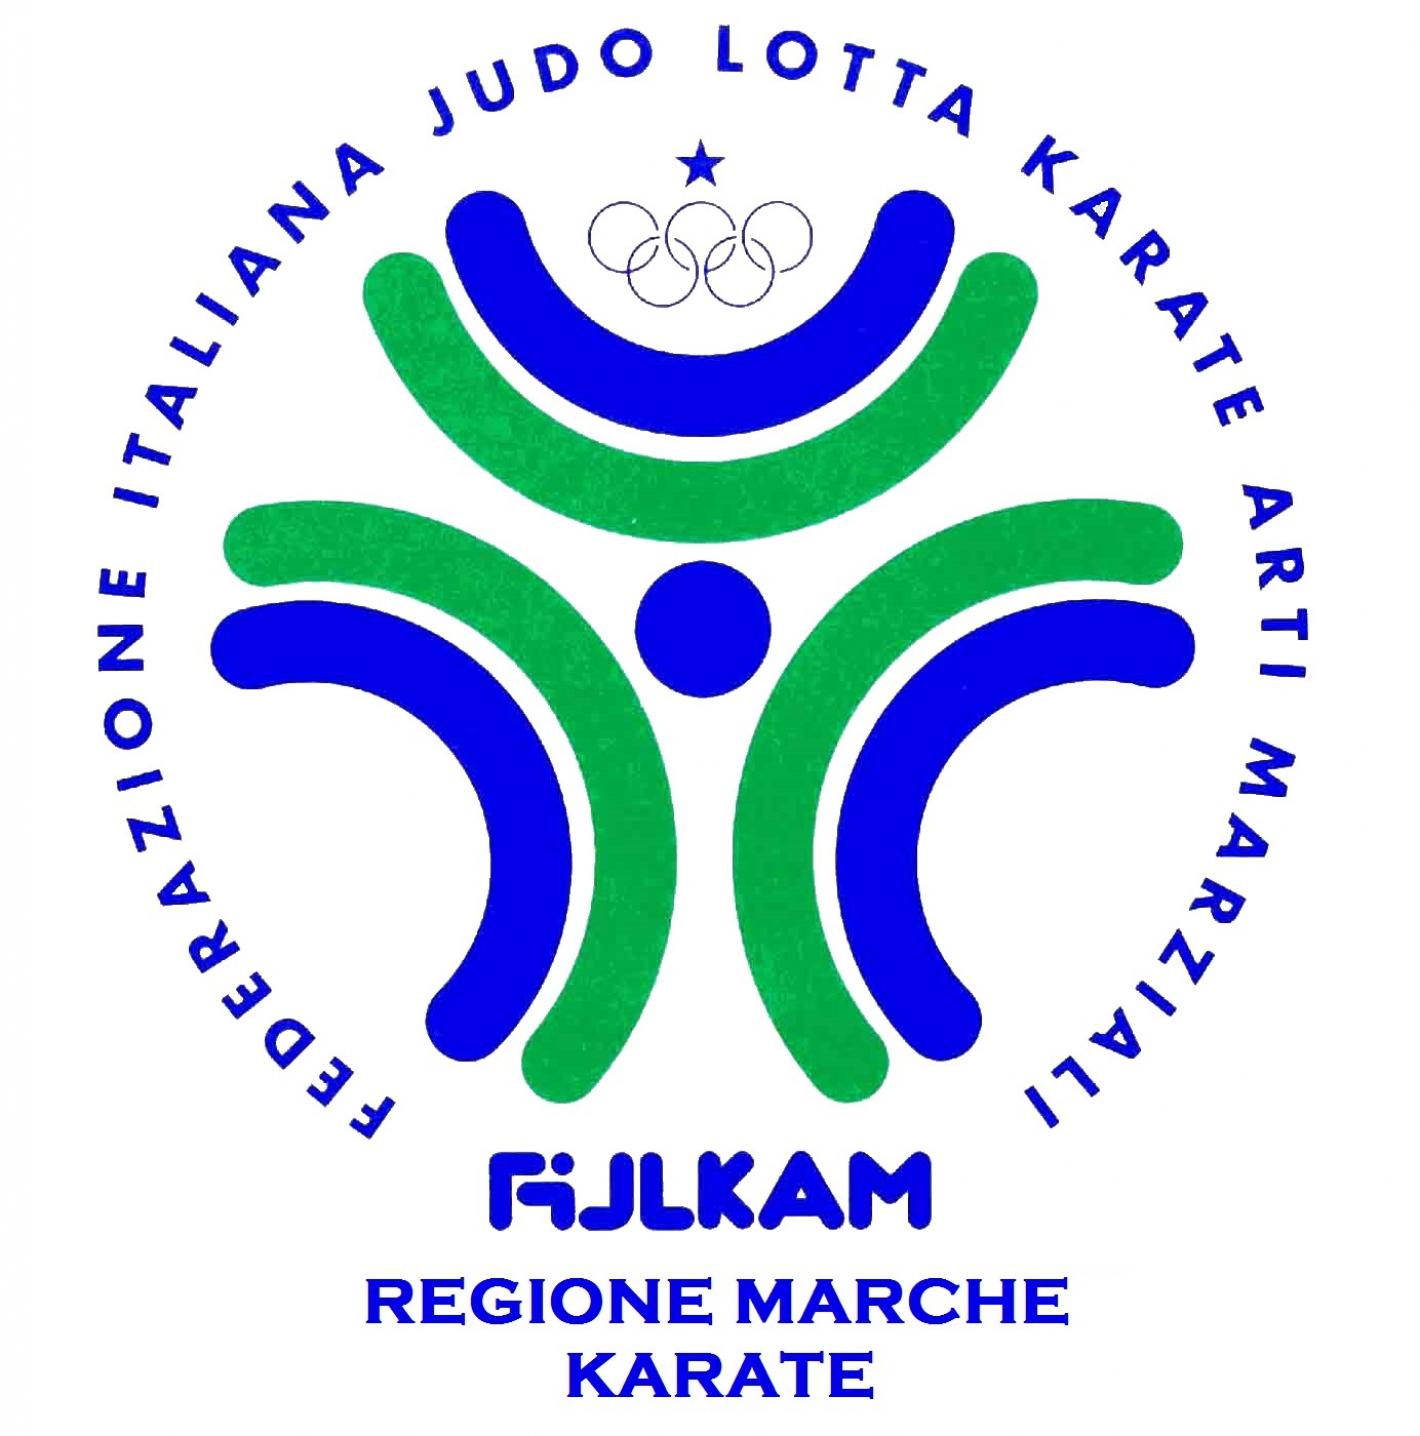 images/marche/Comitato/medium/logo_fijlkam_MARCHE_Karate.jpg